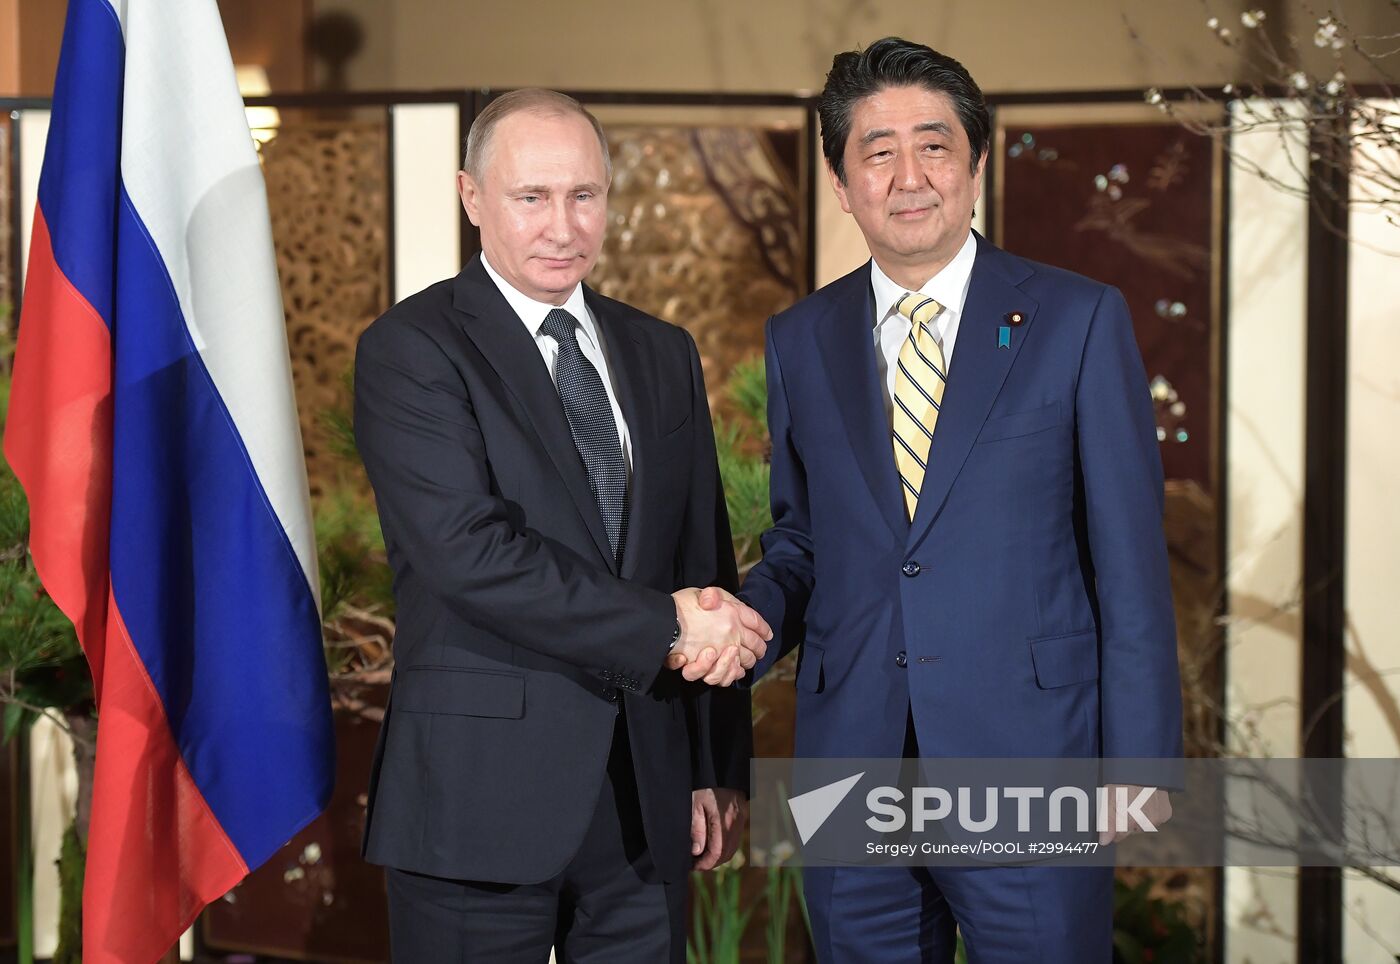 Russian President Vladimir Putin's official visit to Japan